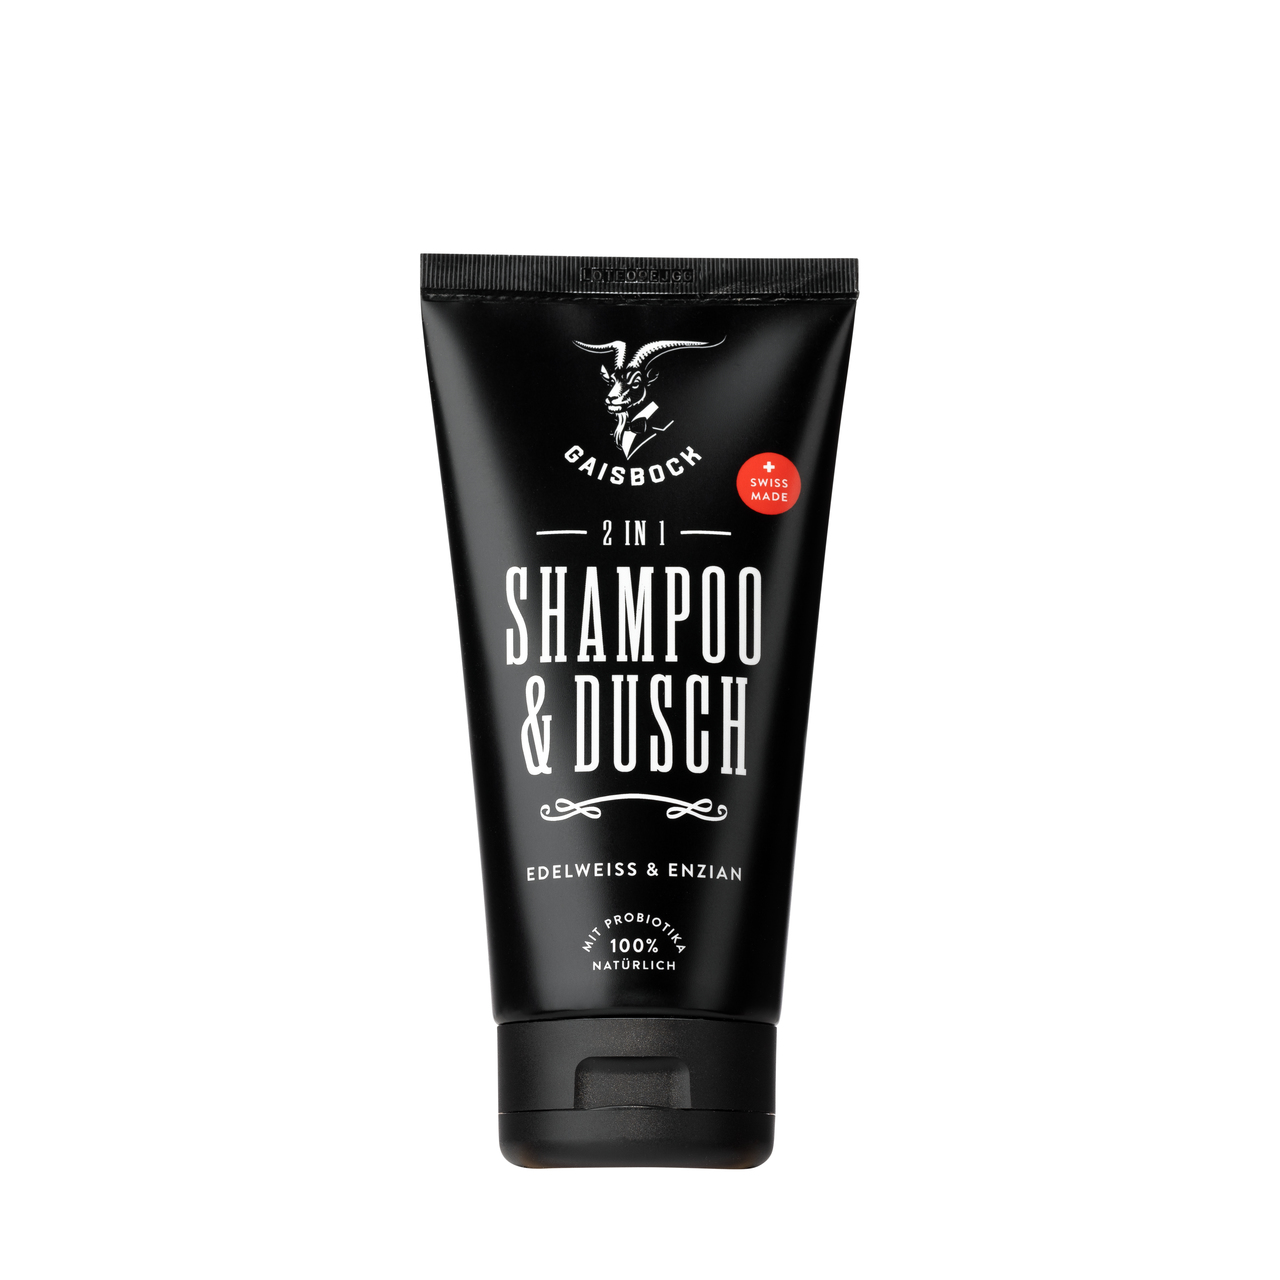 Shampooing & Douche, 150 ml